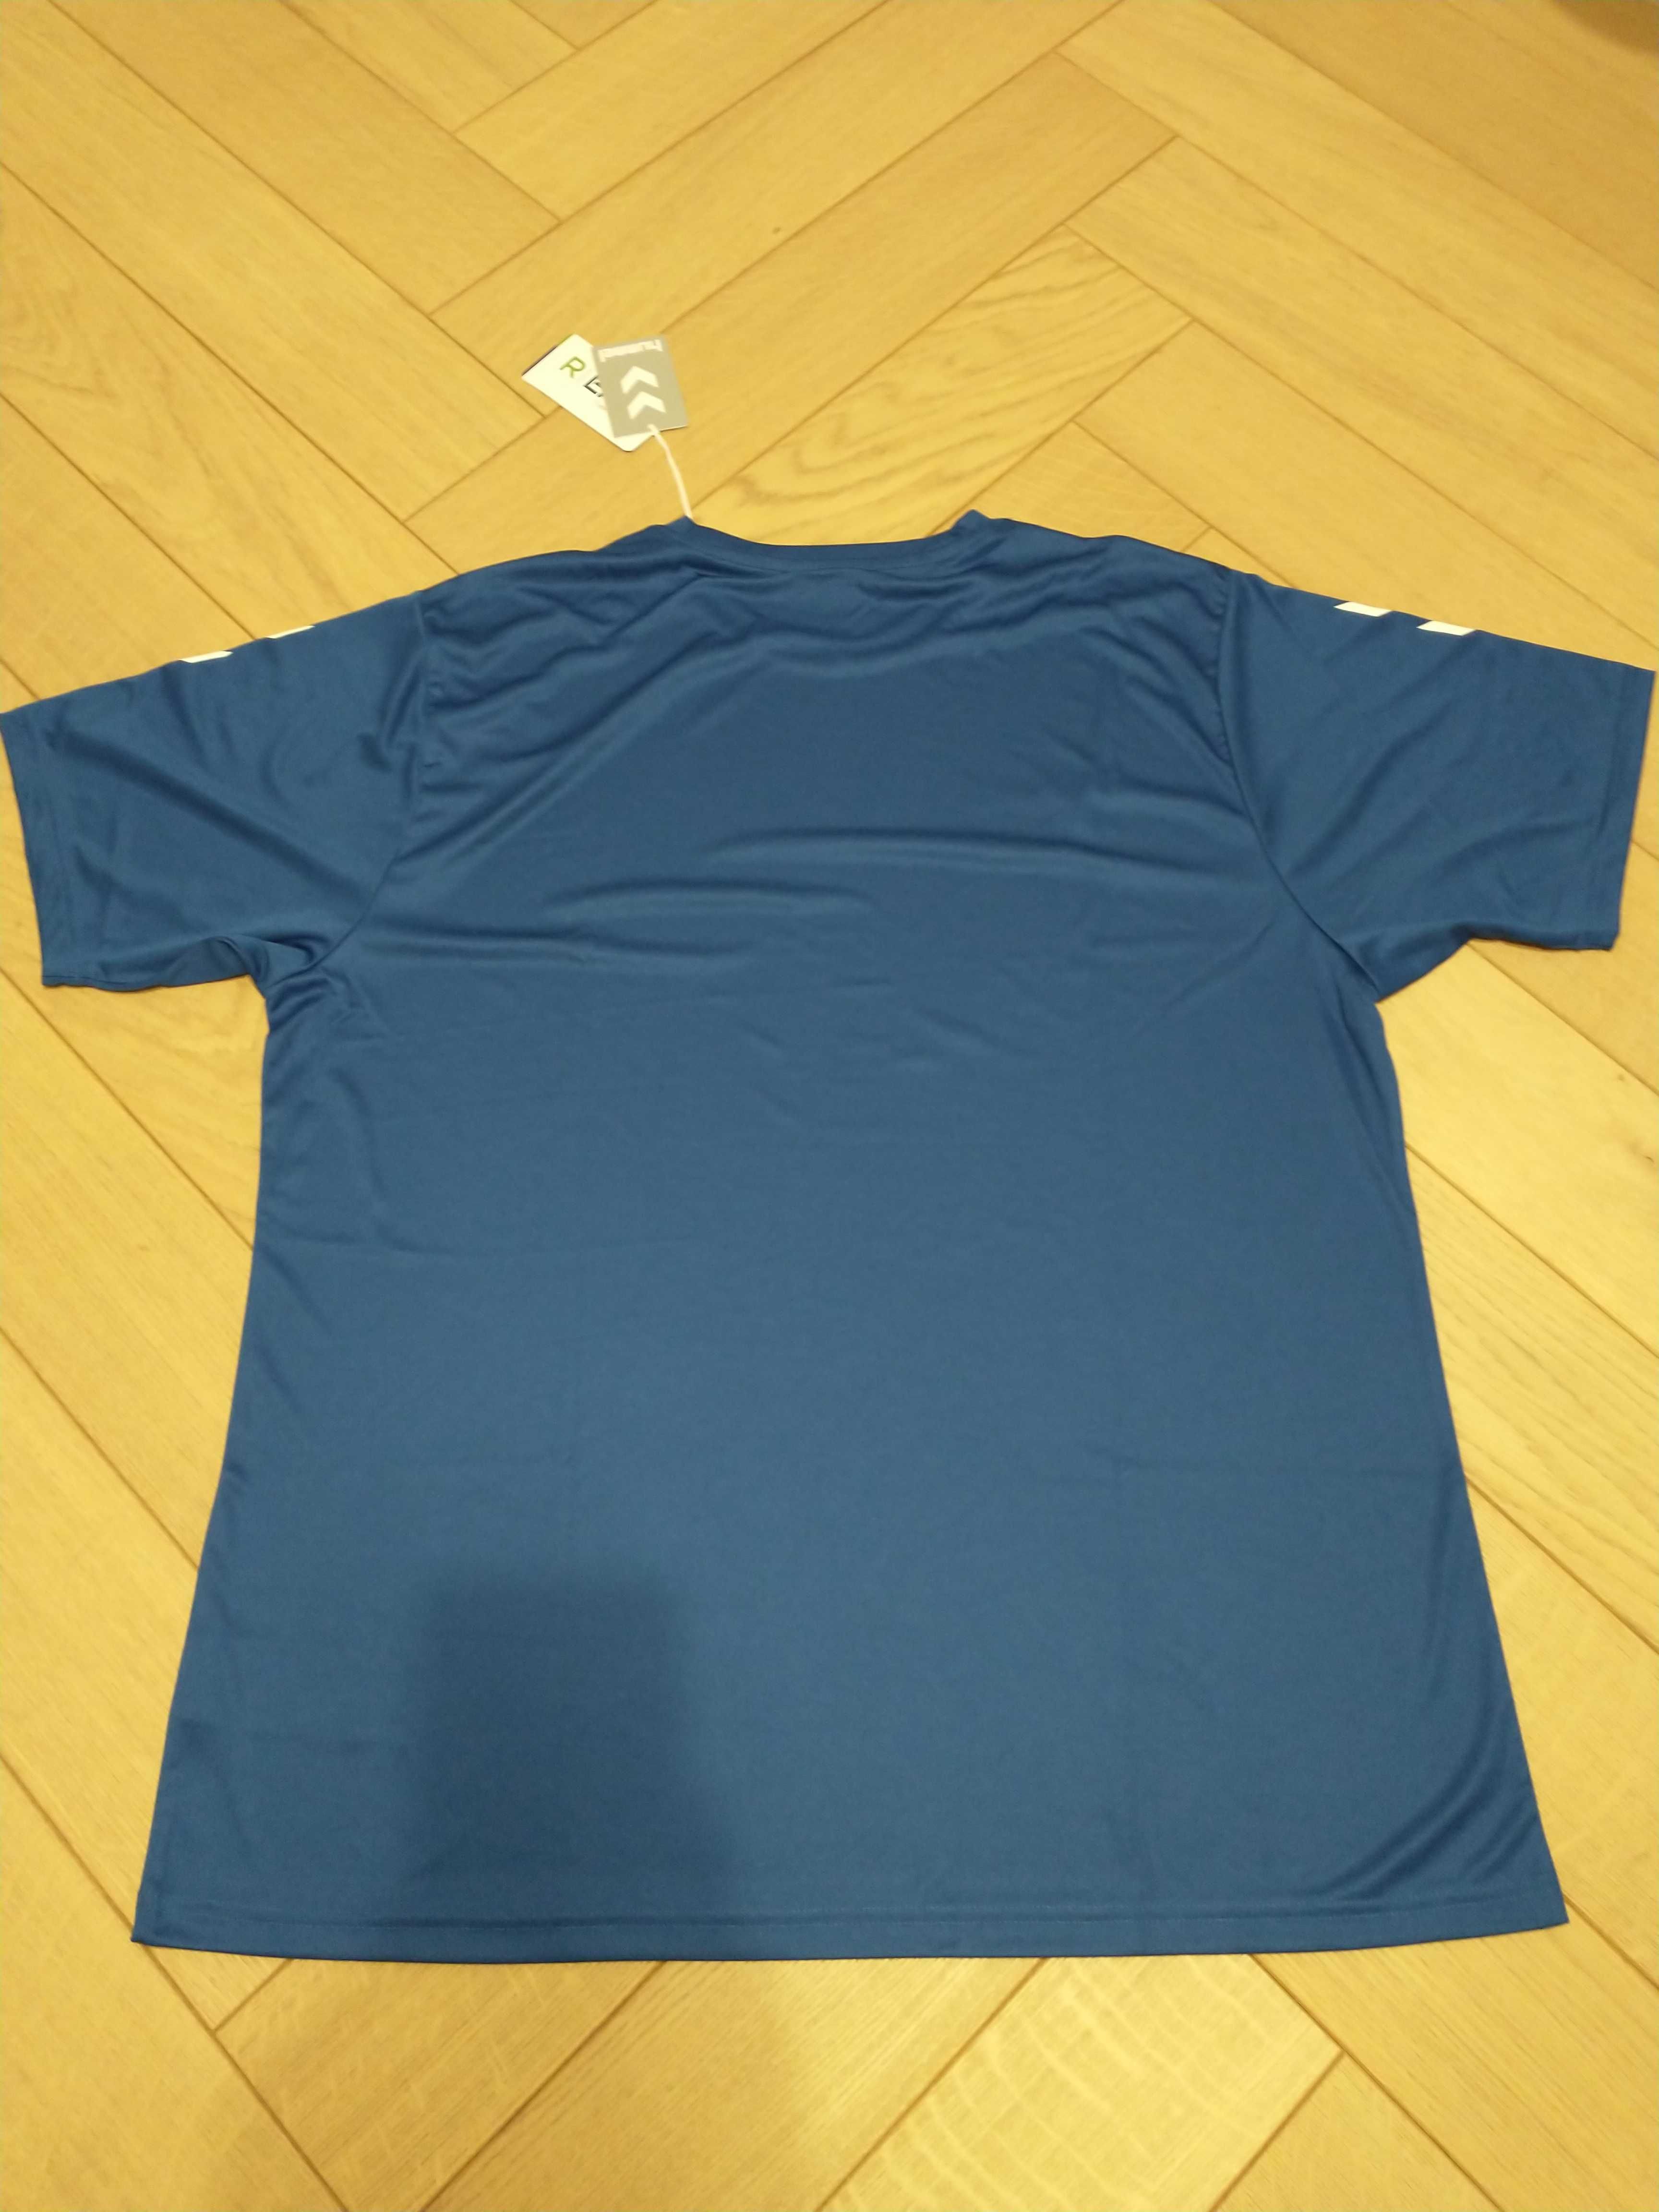 Koszulka Hummel sportowa 4XL nowa